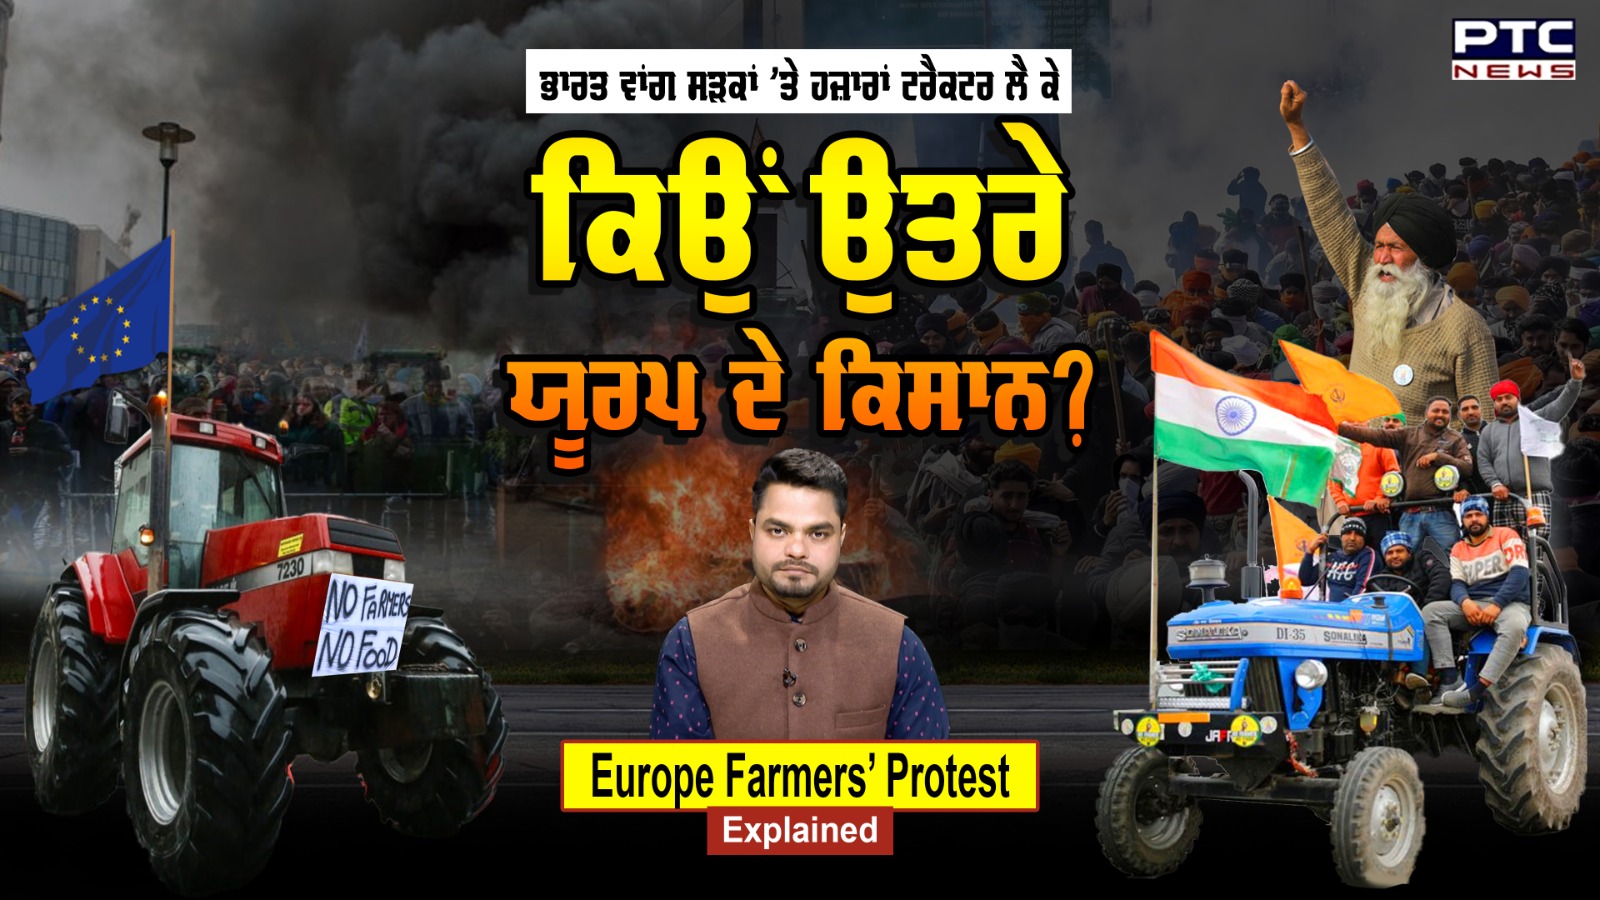 Europe Farmers Protest: ਭਾਰਤ ਵਾਂਗ ਸੜਕਾਂ 'ਤੇ ਟਰੈਕਟਰ ਲੈ ਕੇ ਕਿਉਂ ਉਤਰੇ ਯੂਰਪ ਦੇ ਕਿਸਾਨ?